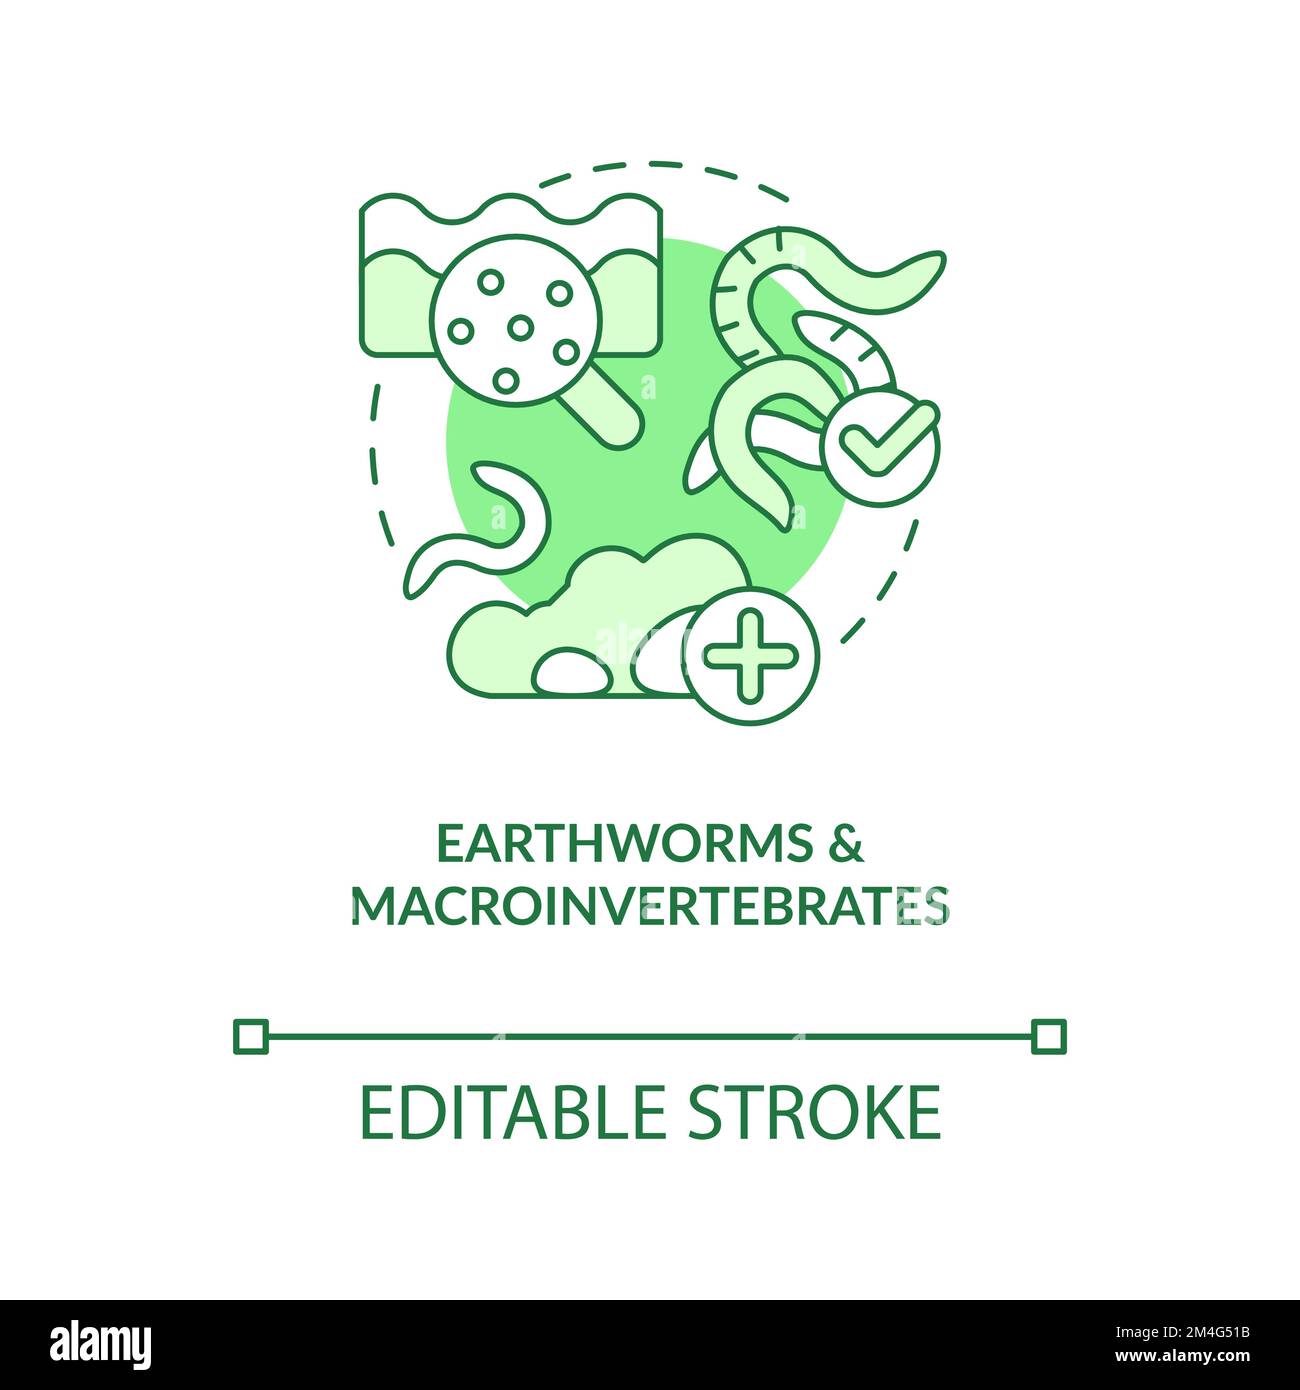 Earthworms and macroinvertebrates green concept icon Stock Vector